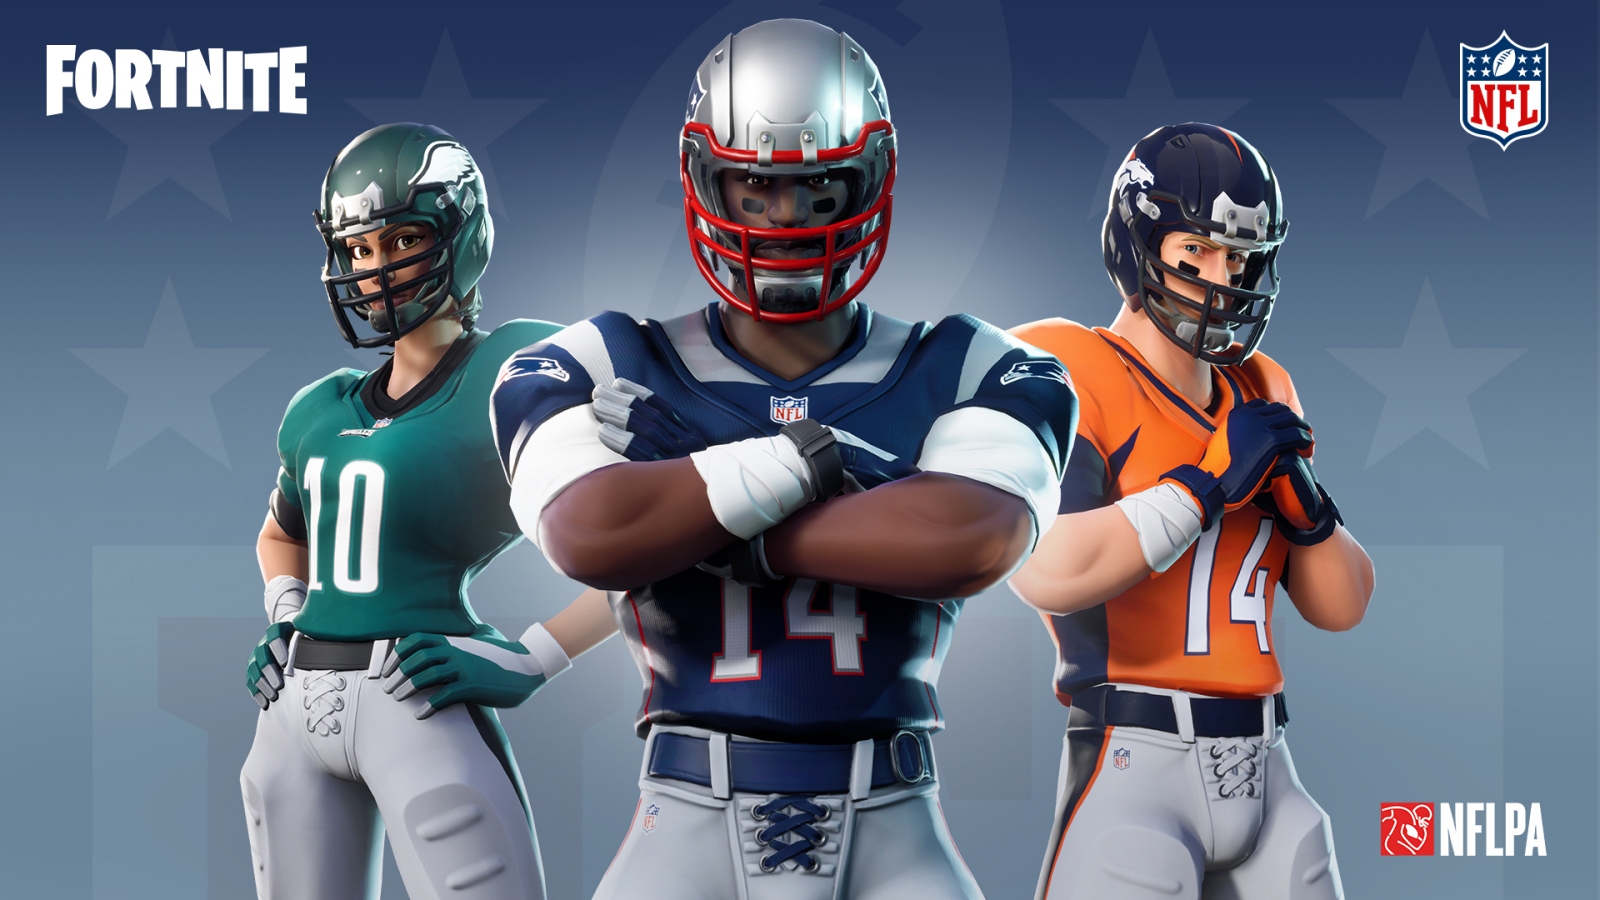 Epic partnership brings NFL uniforms to Fortnite